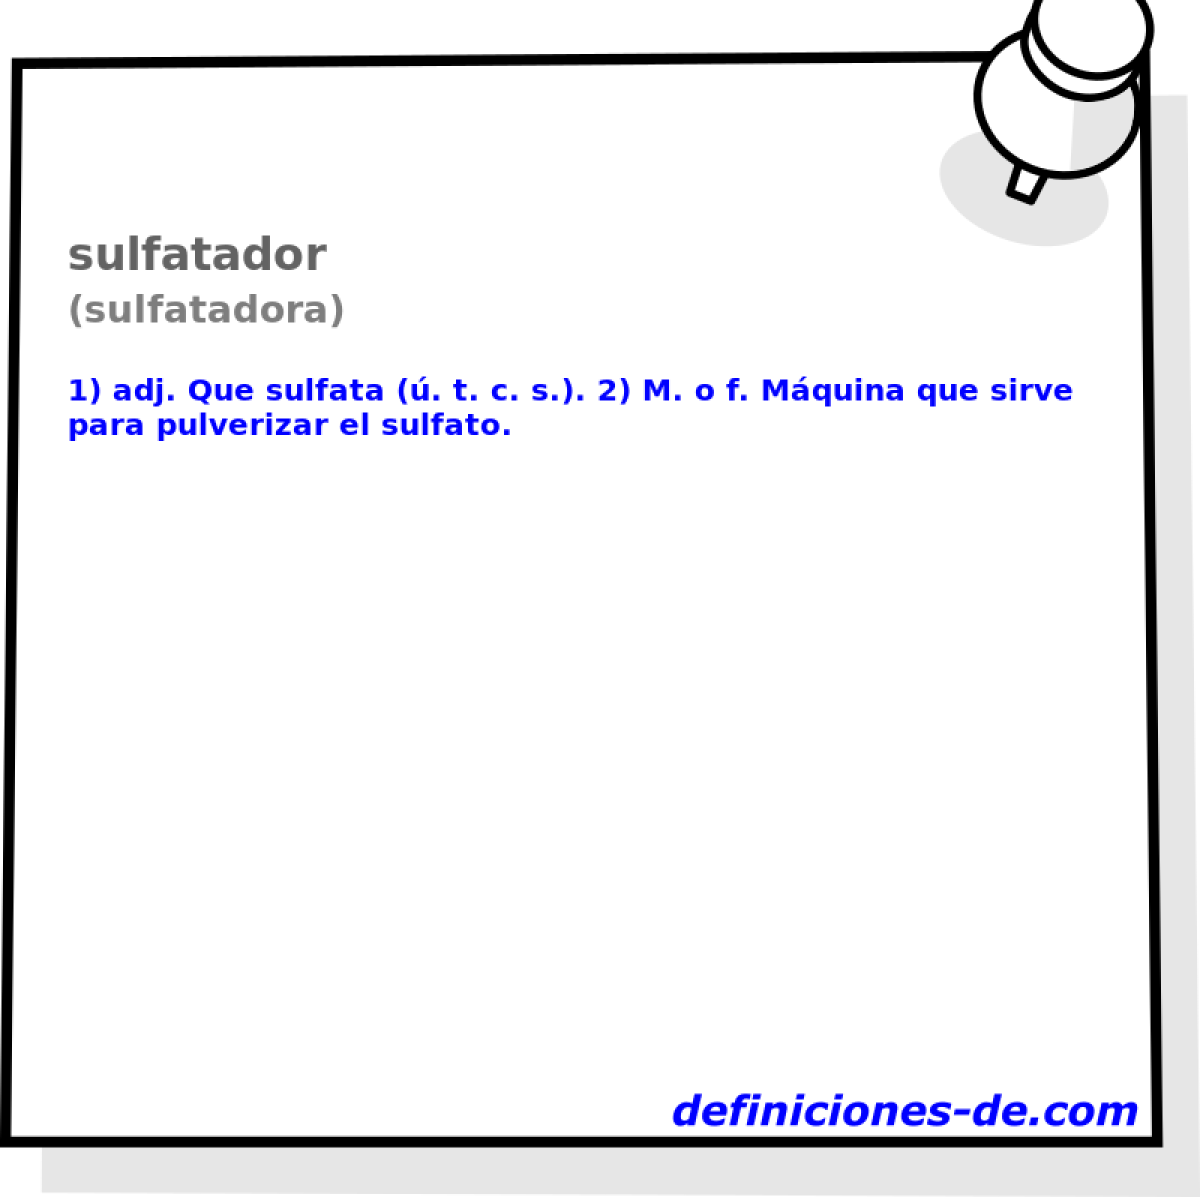 sulfatador (sulfatadora)